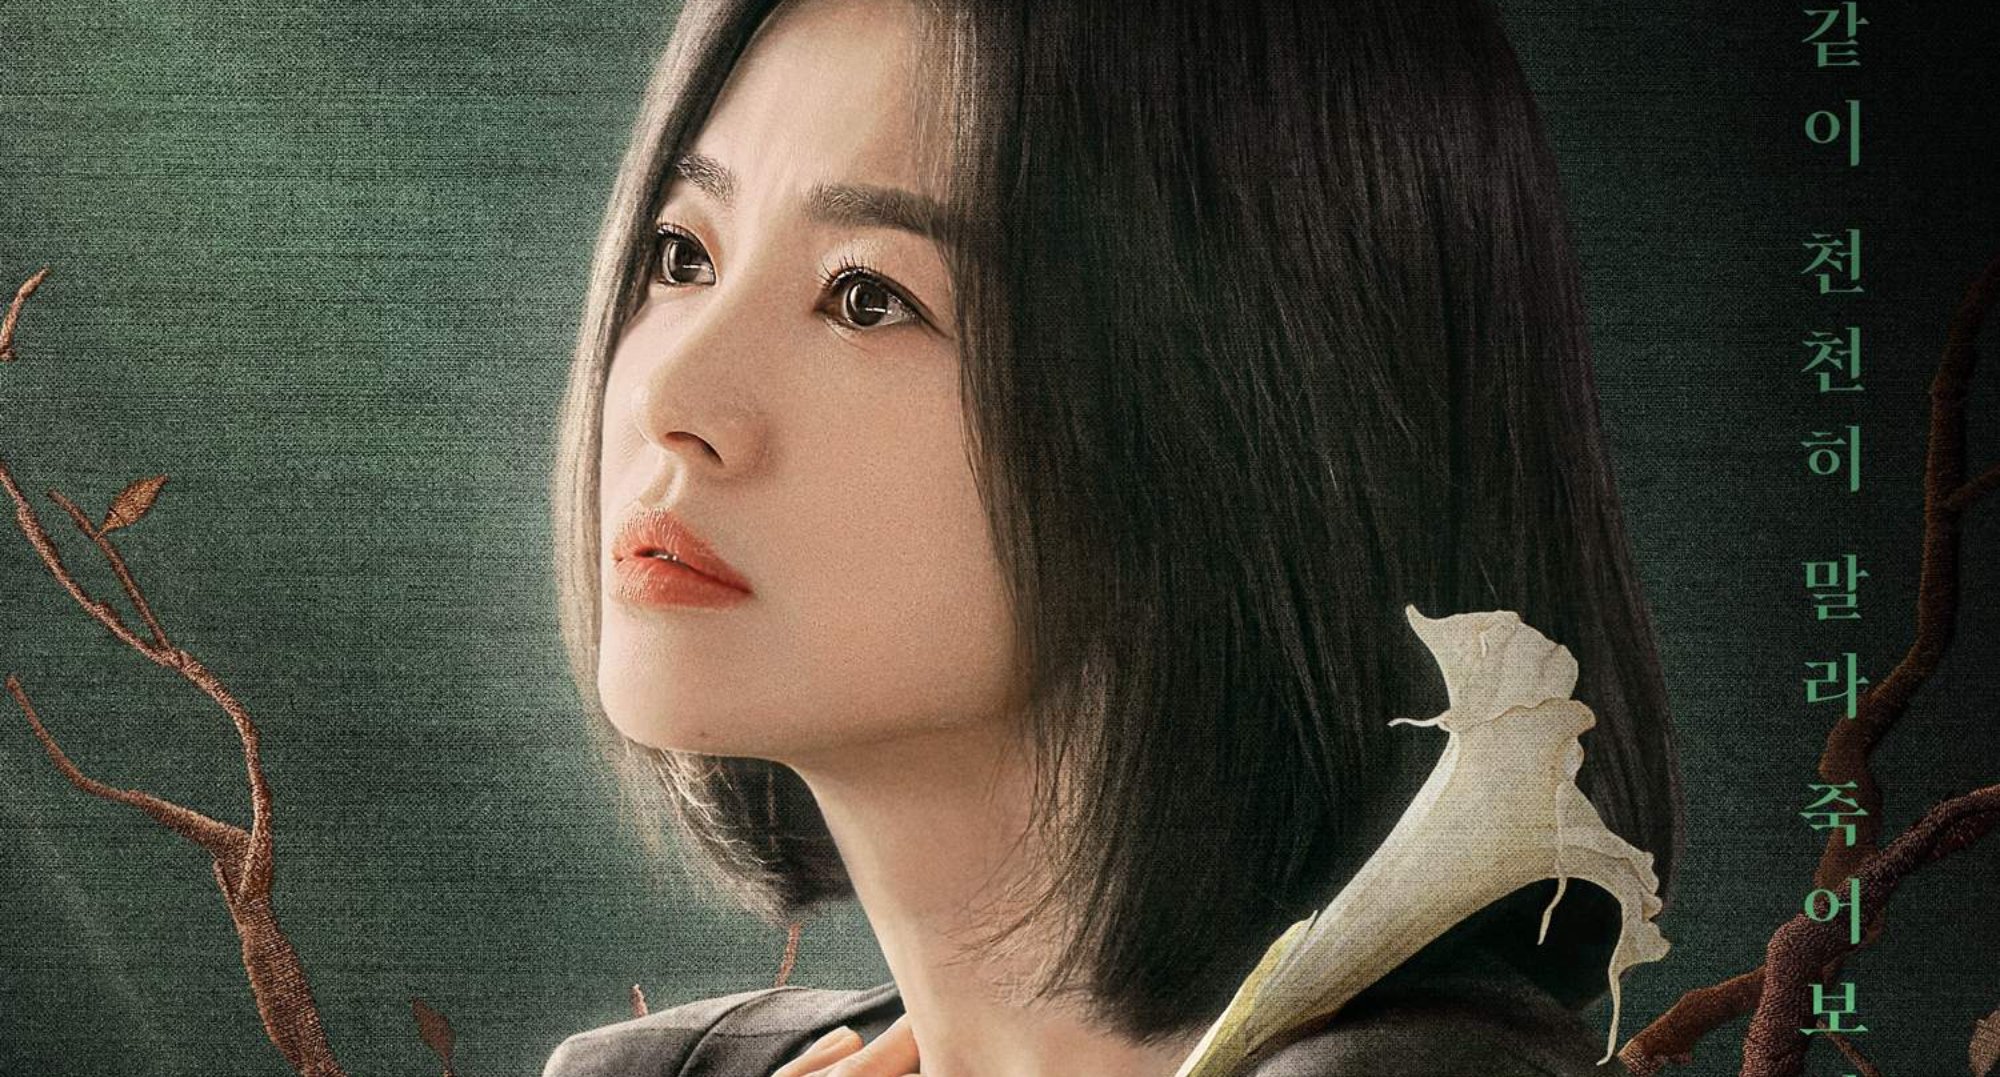 Song Hye-kyo stars as Moon Dong-eun in 'The Glory' K-drama.